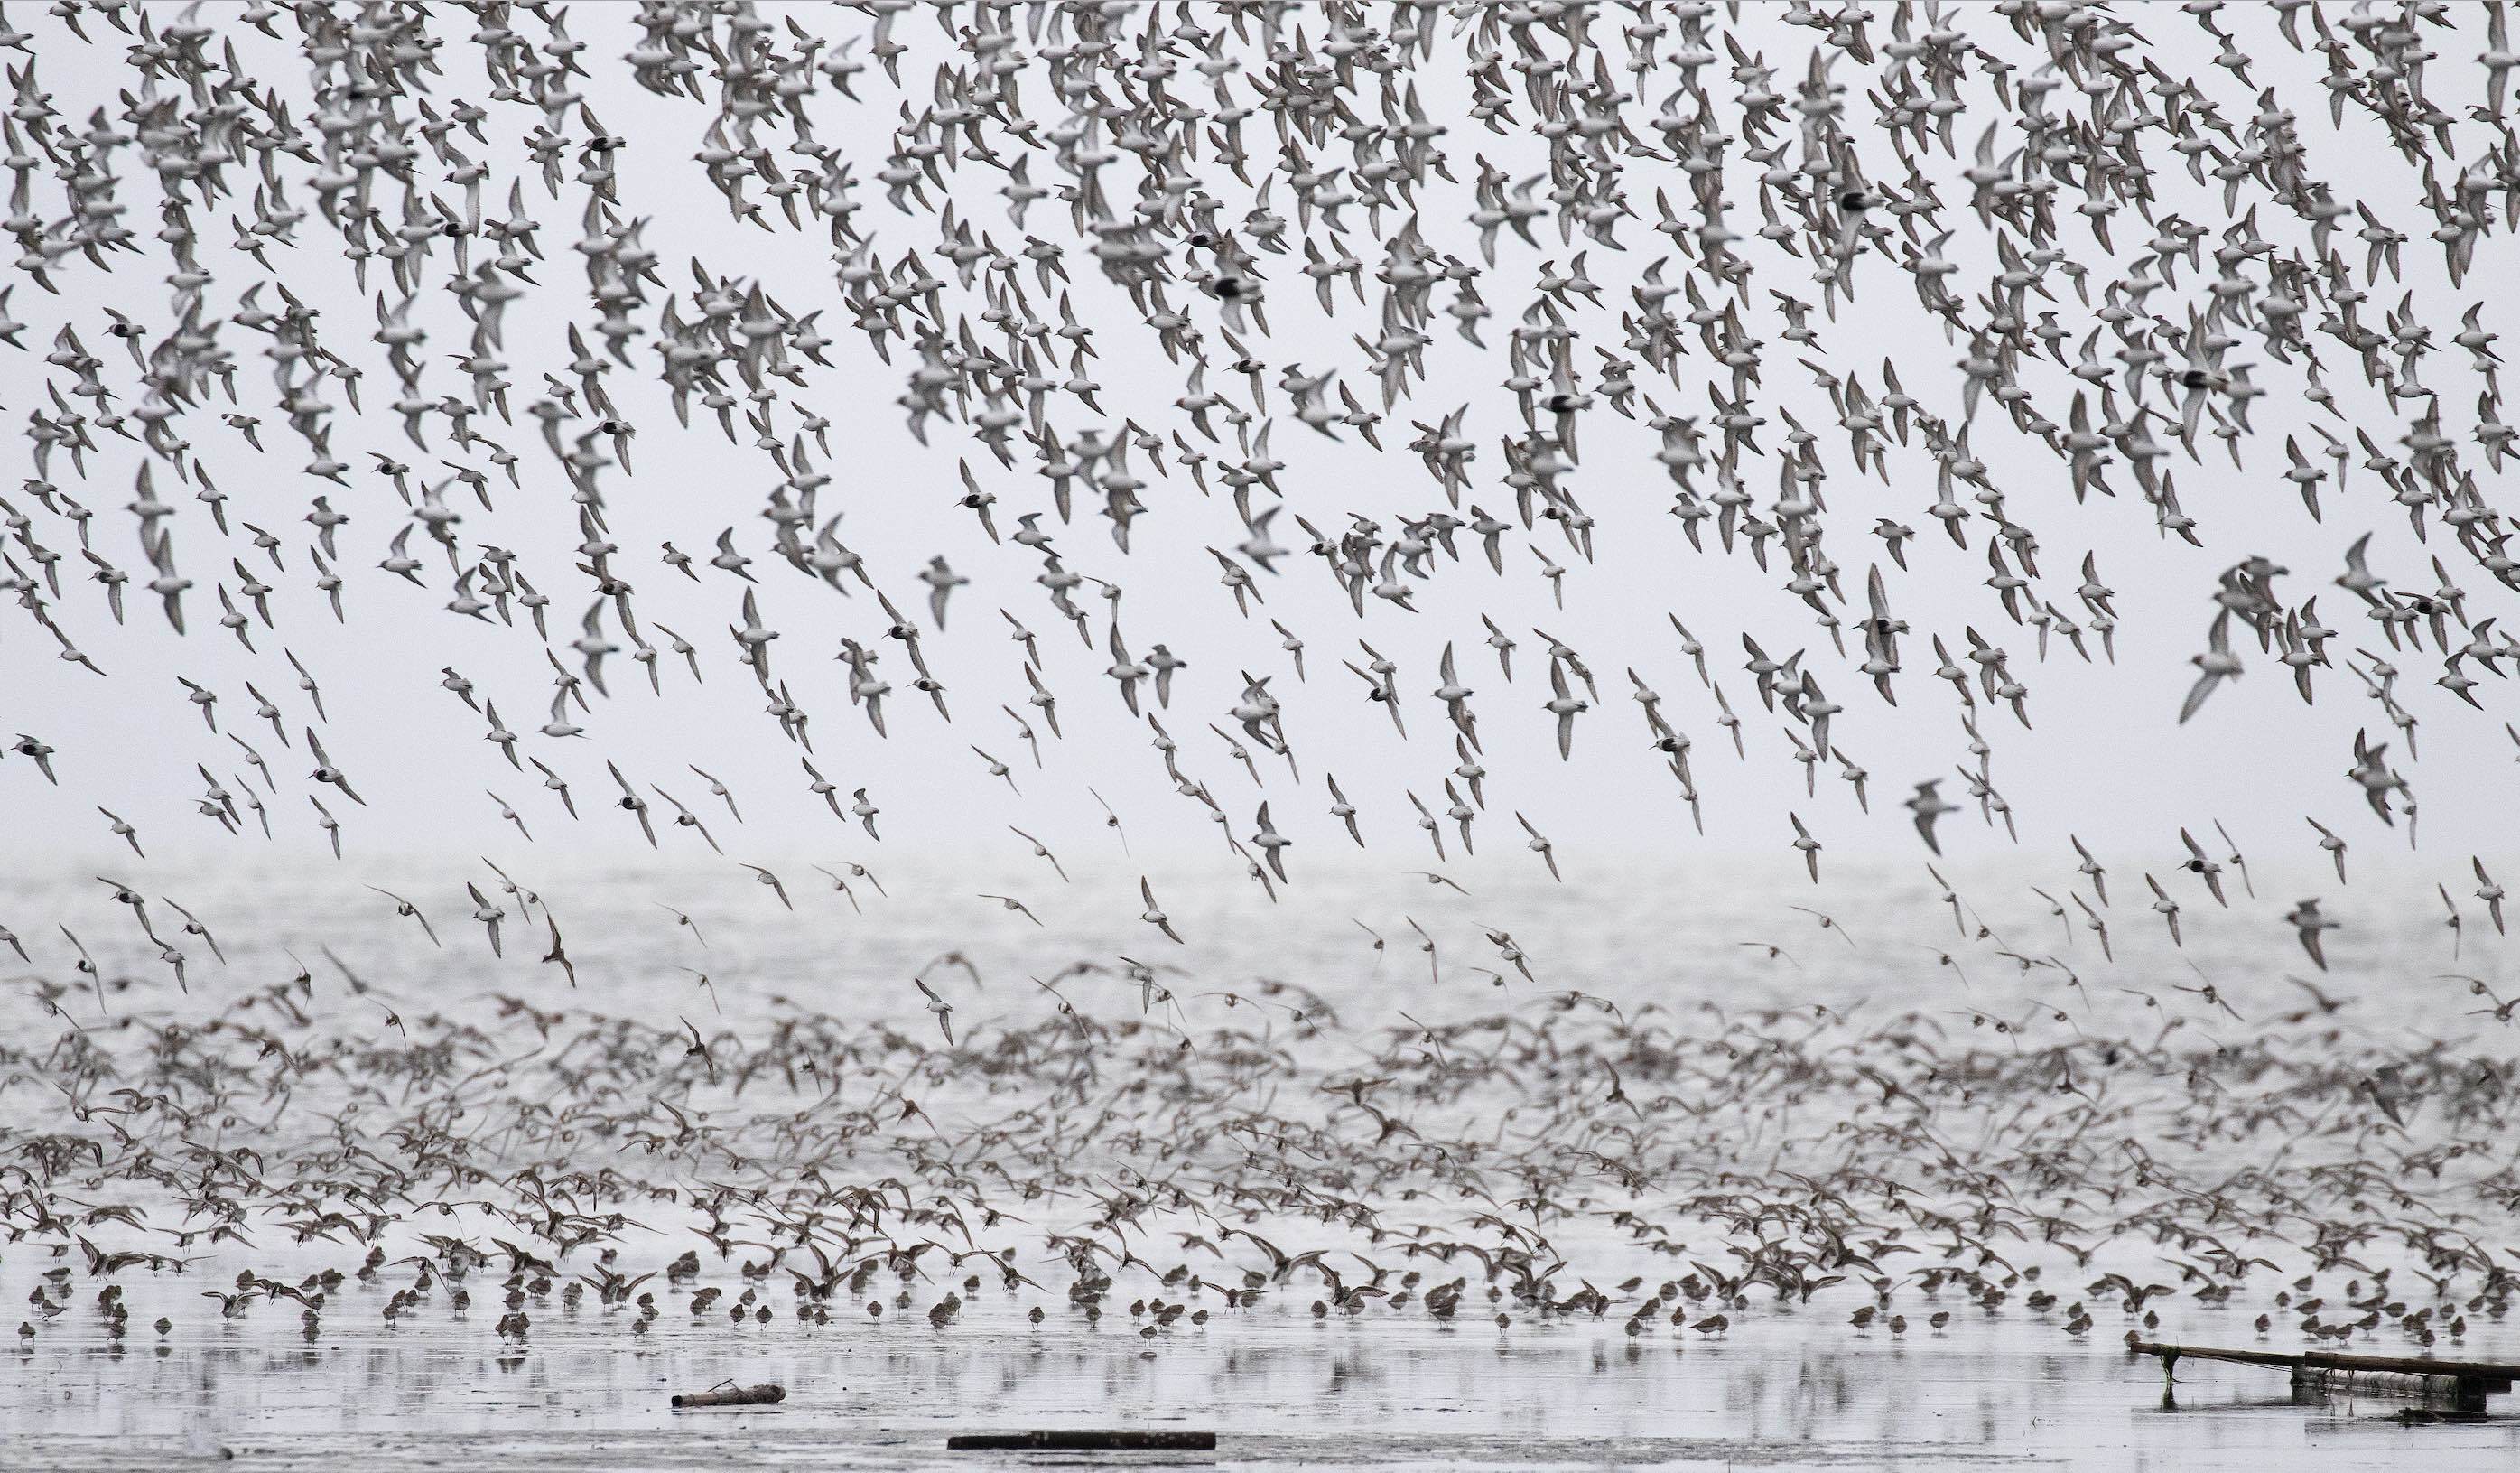 Large flock of shorebirds in flight